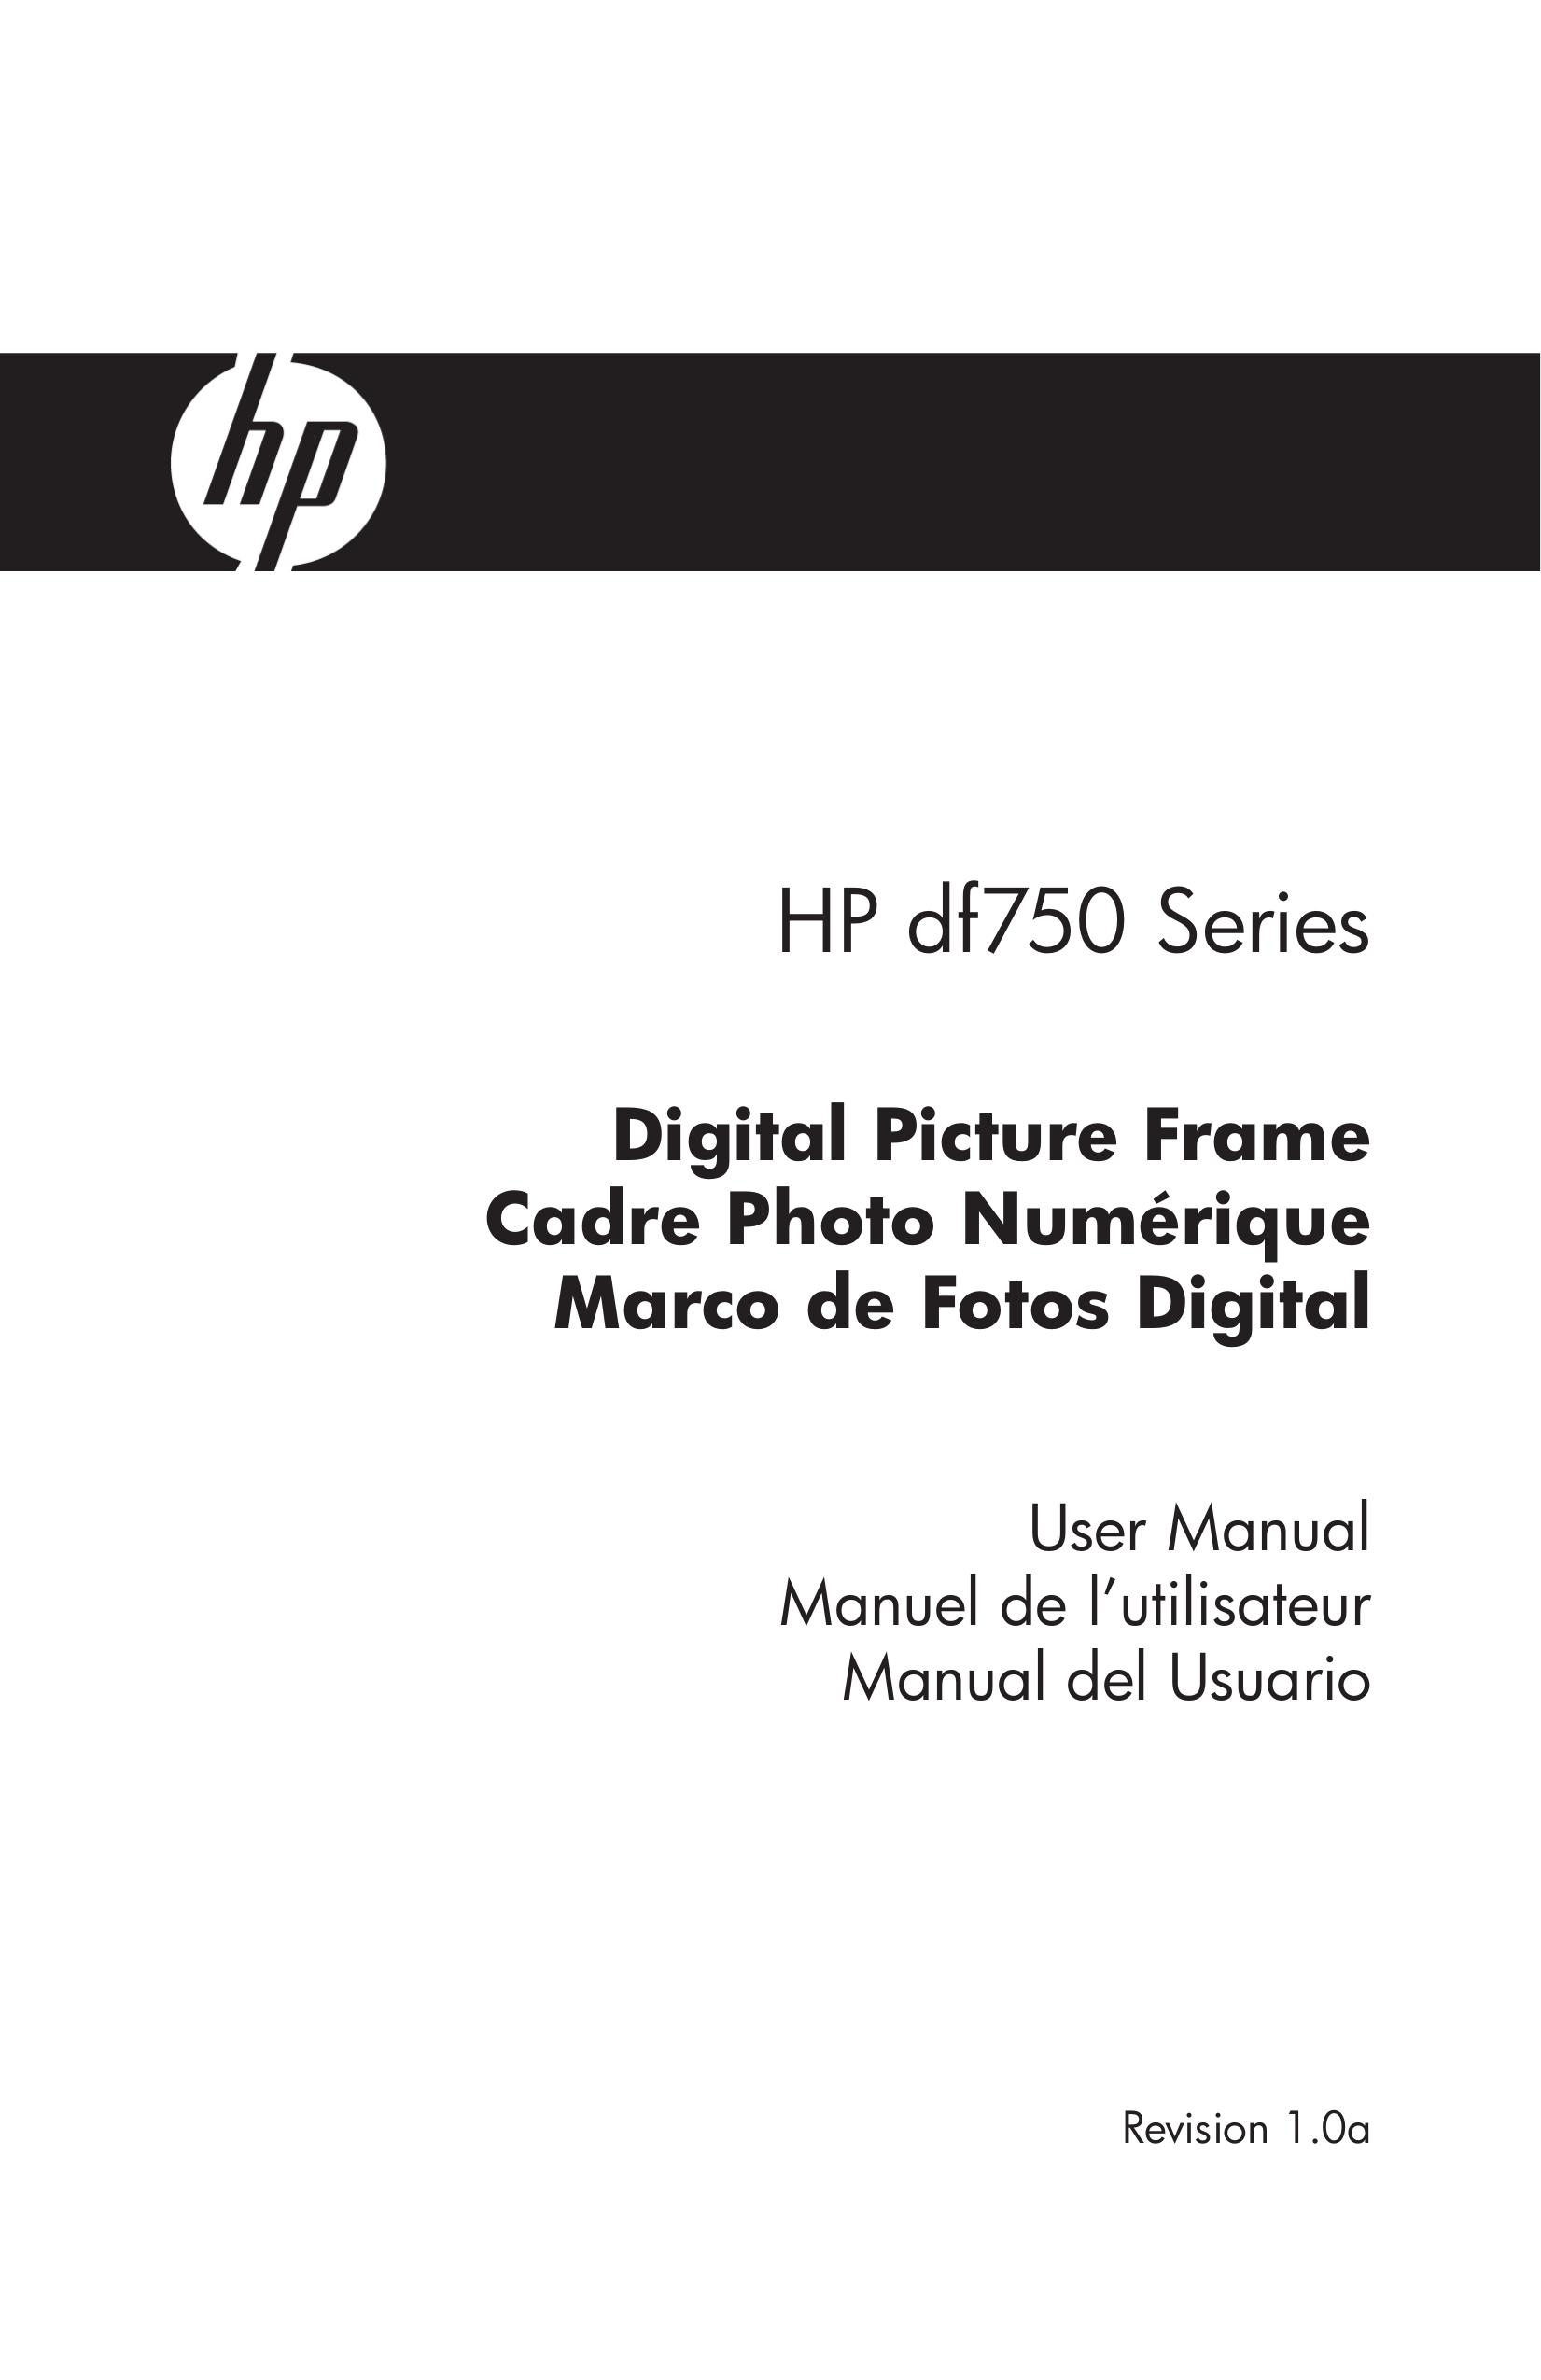 HP (Hewlett-Packard) df750 Series Digital Photo Frame User Manual